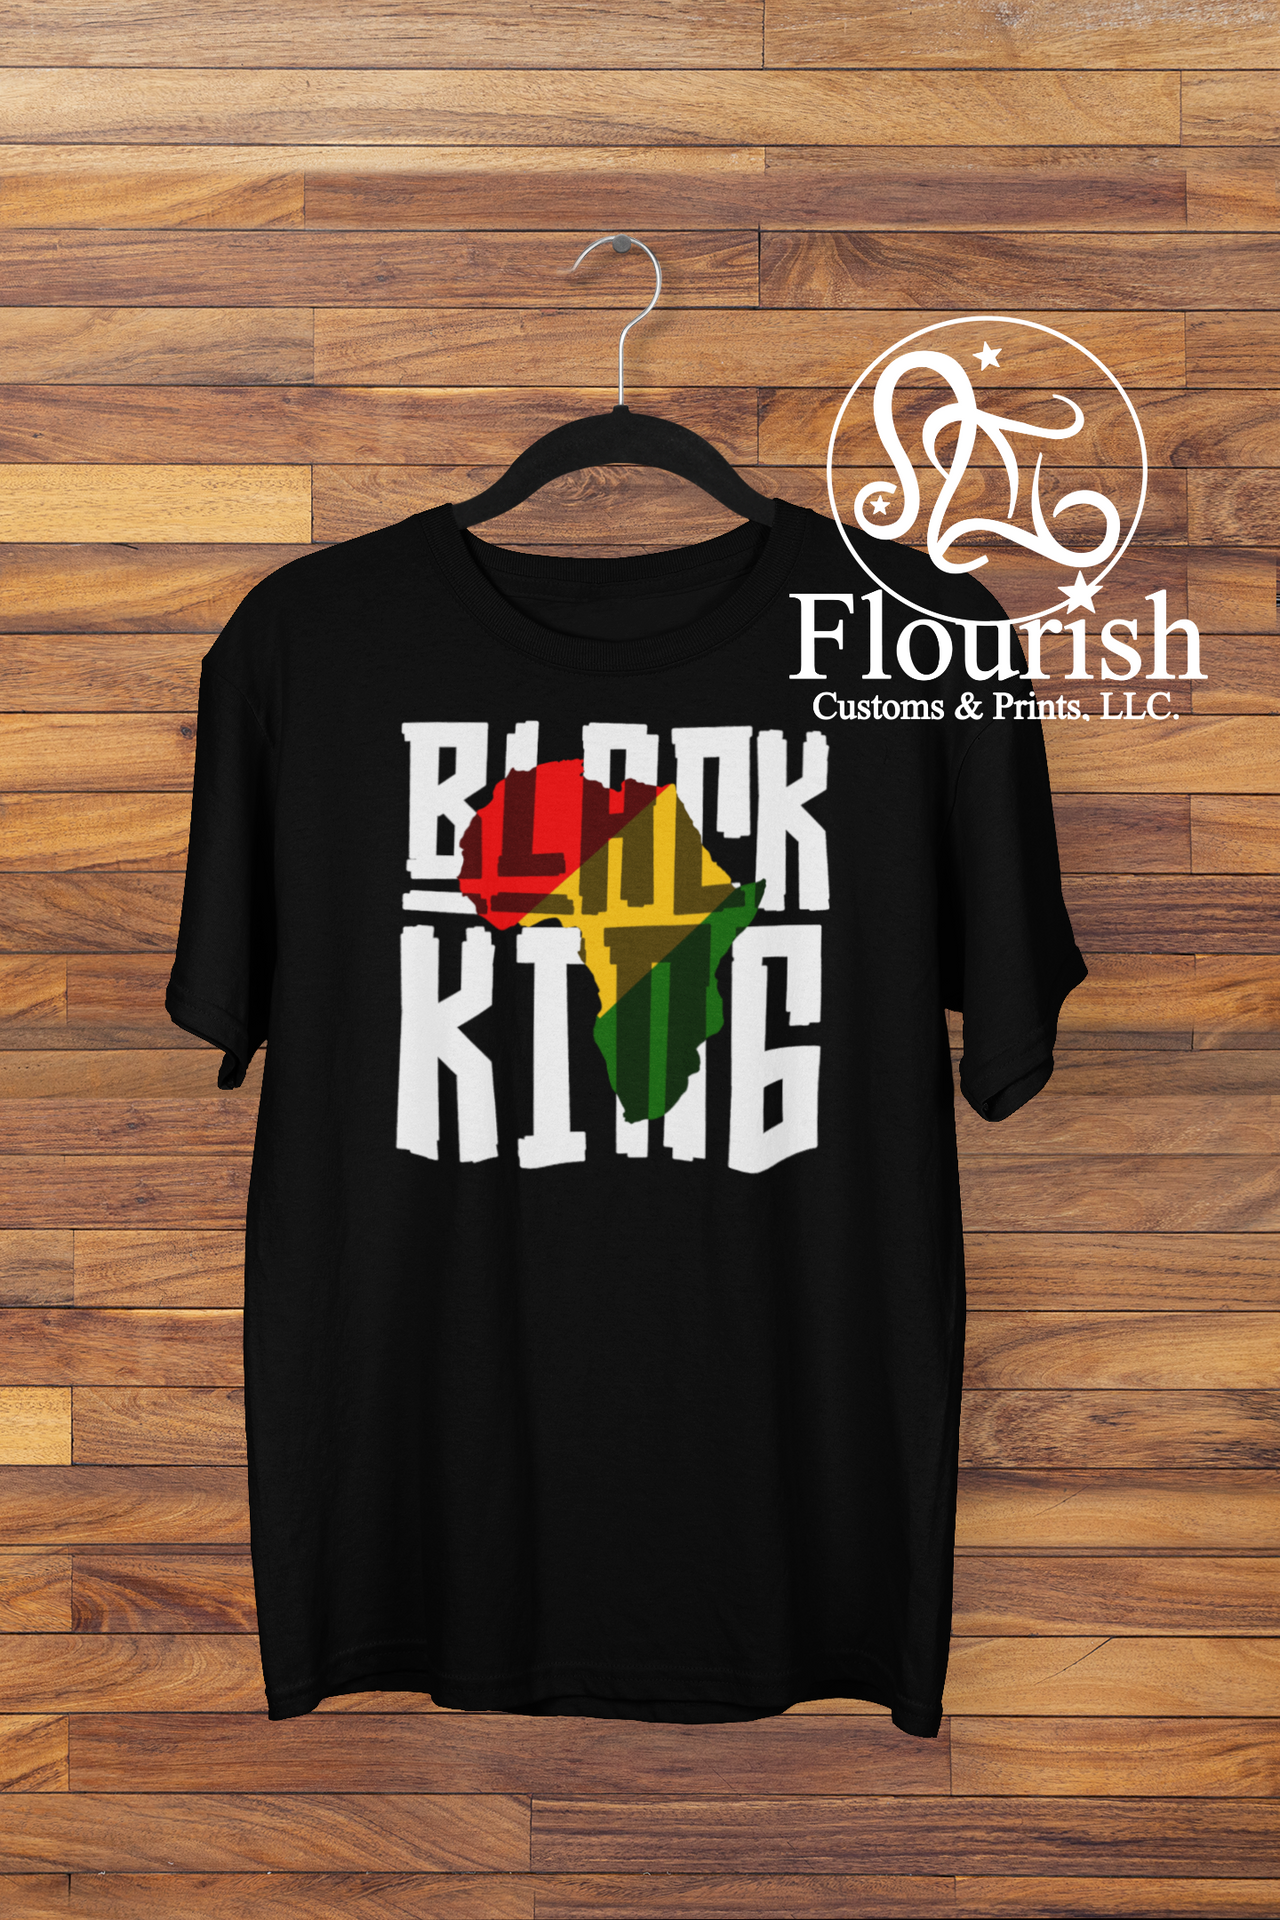 Black King (Africa) Tee